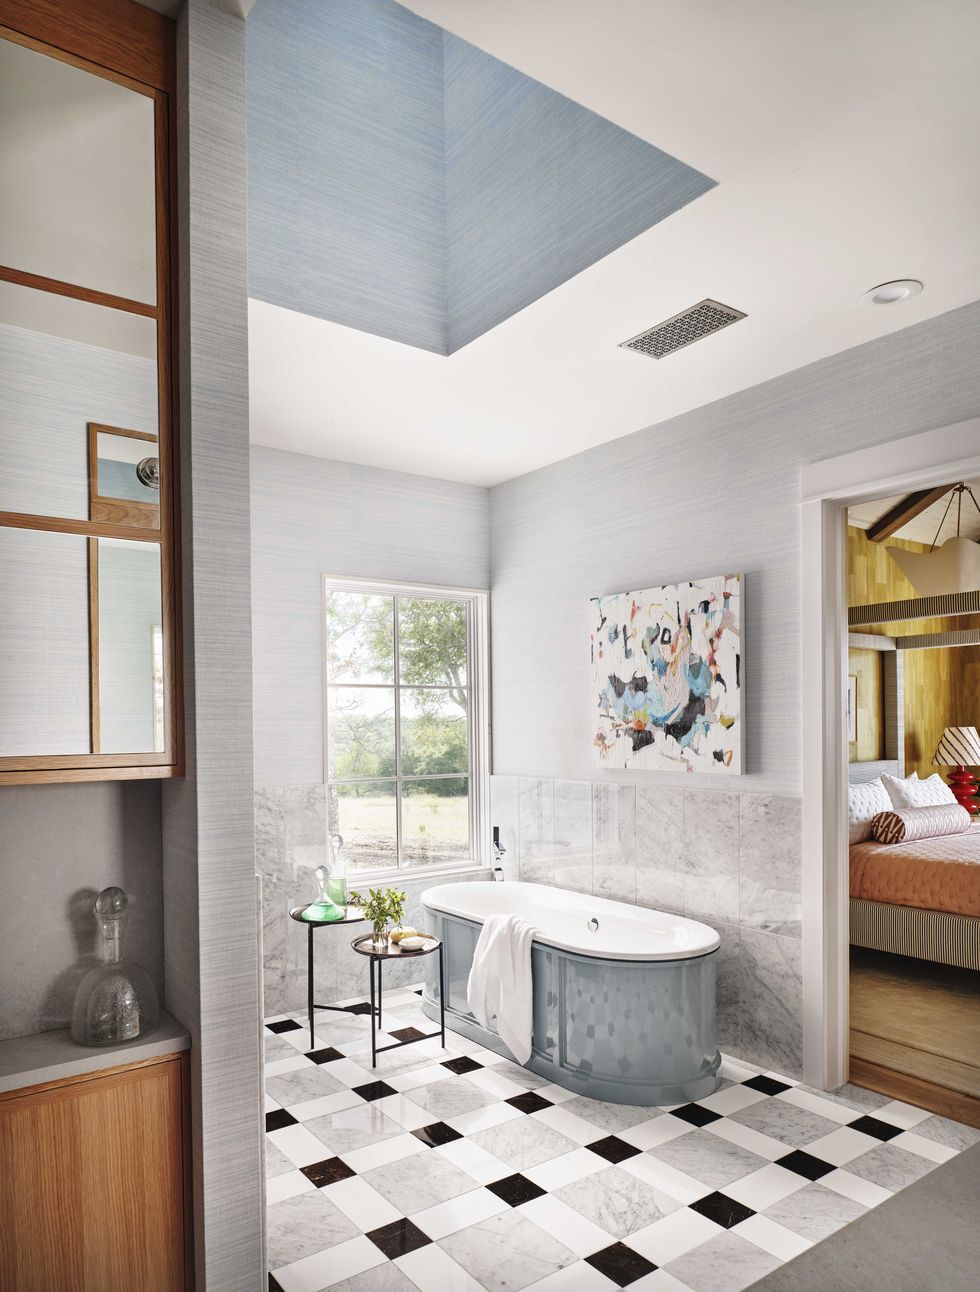 black, white and gray tiles, bath tub, square wall tiles, wall art